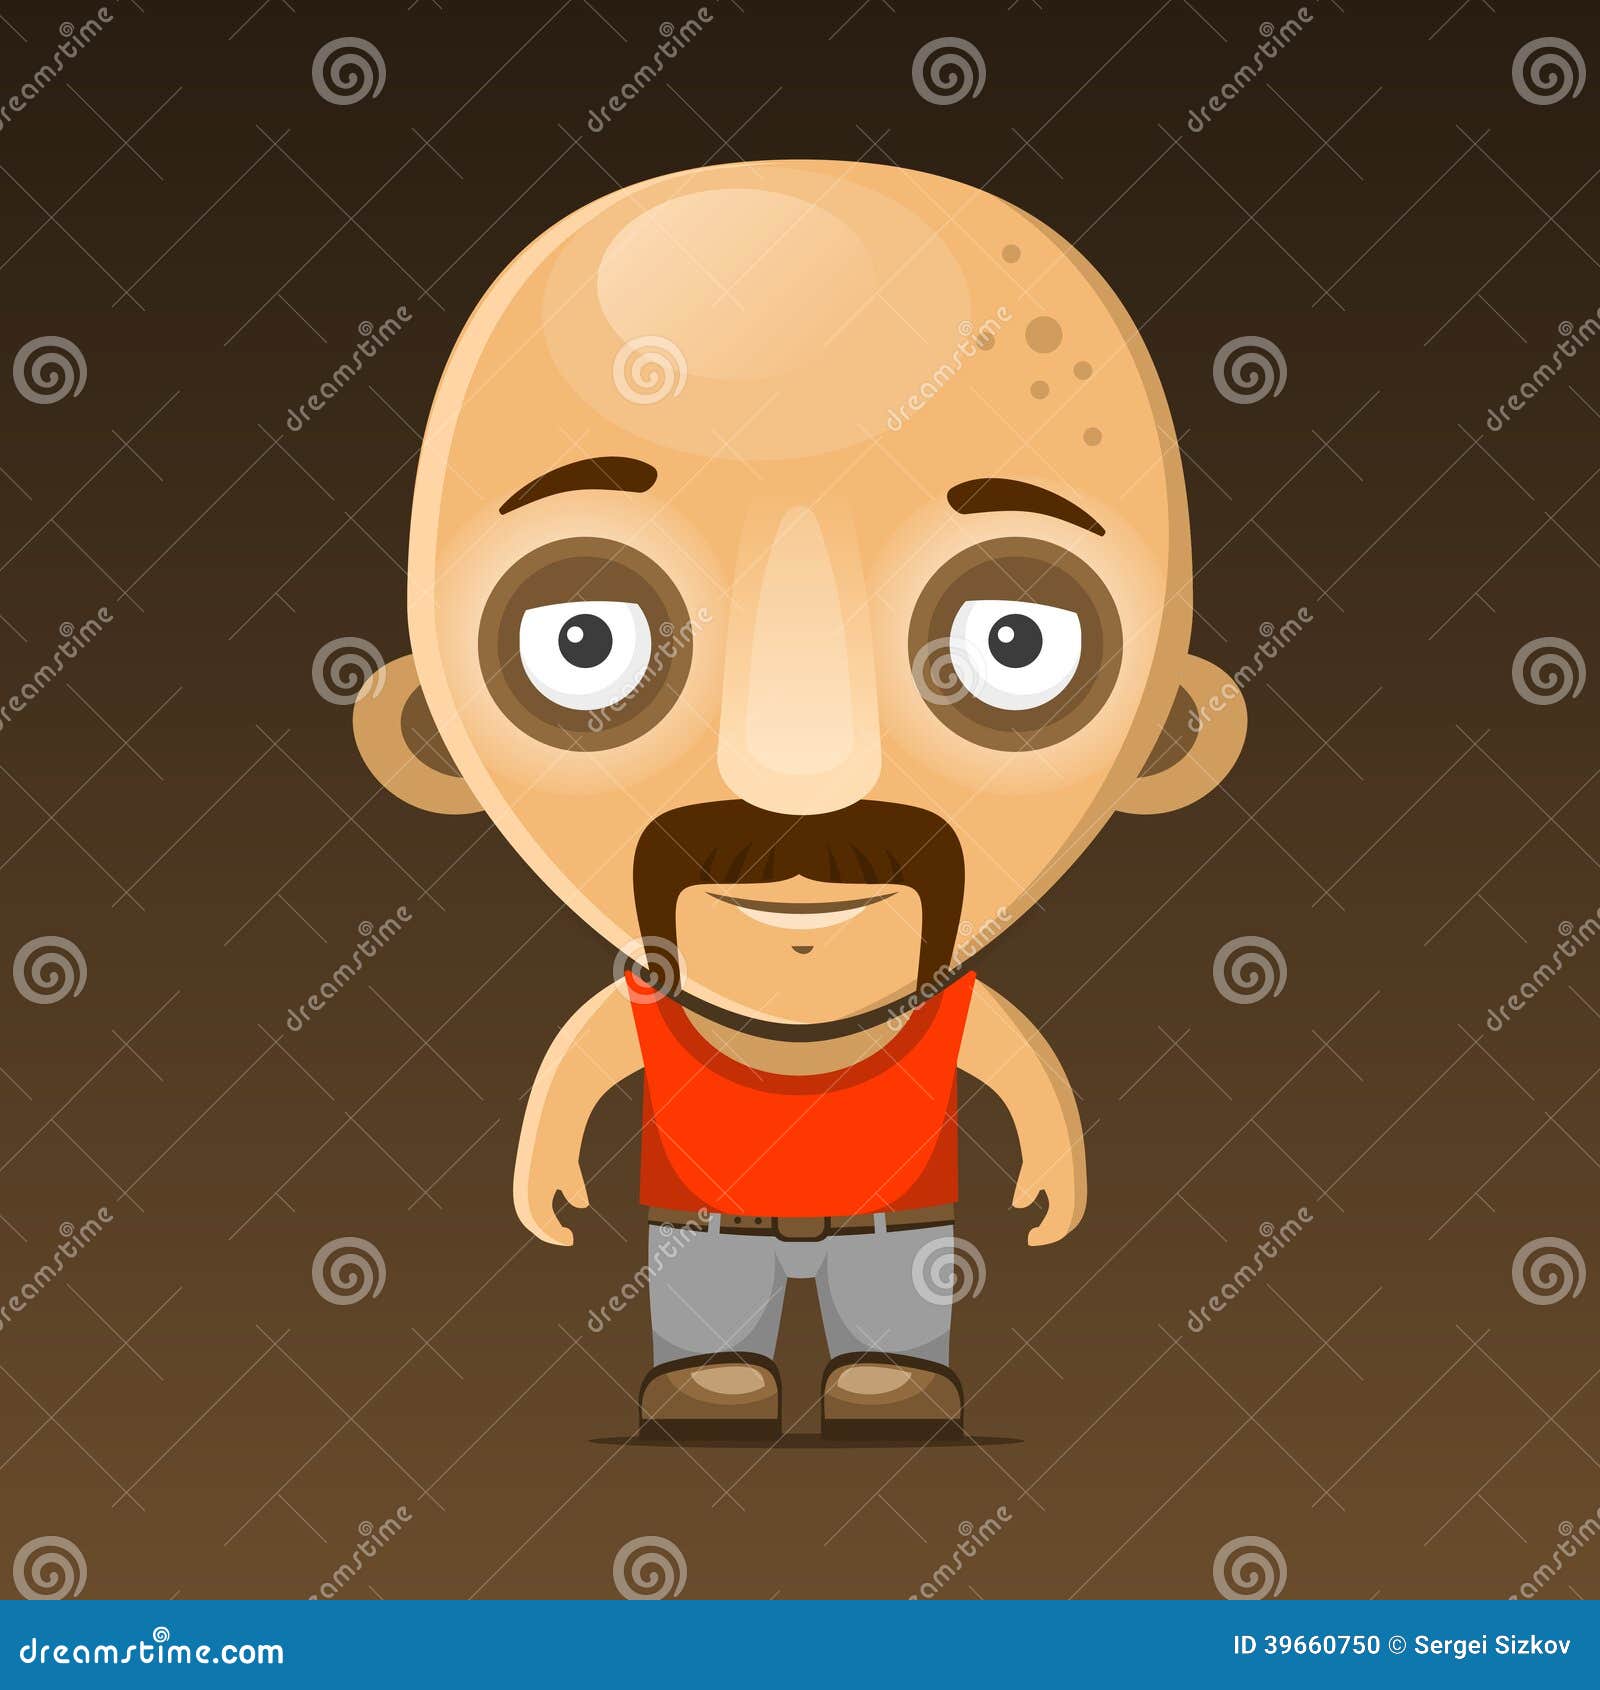 Bald Man Cartoon Character with Mustache. Vector Stock Vector